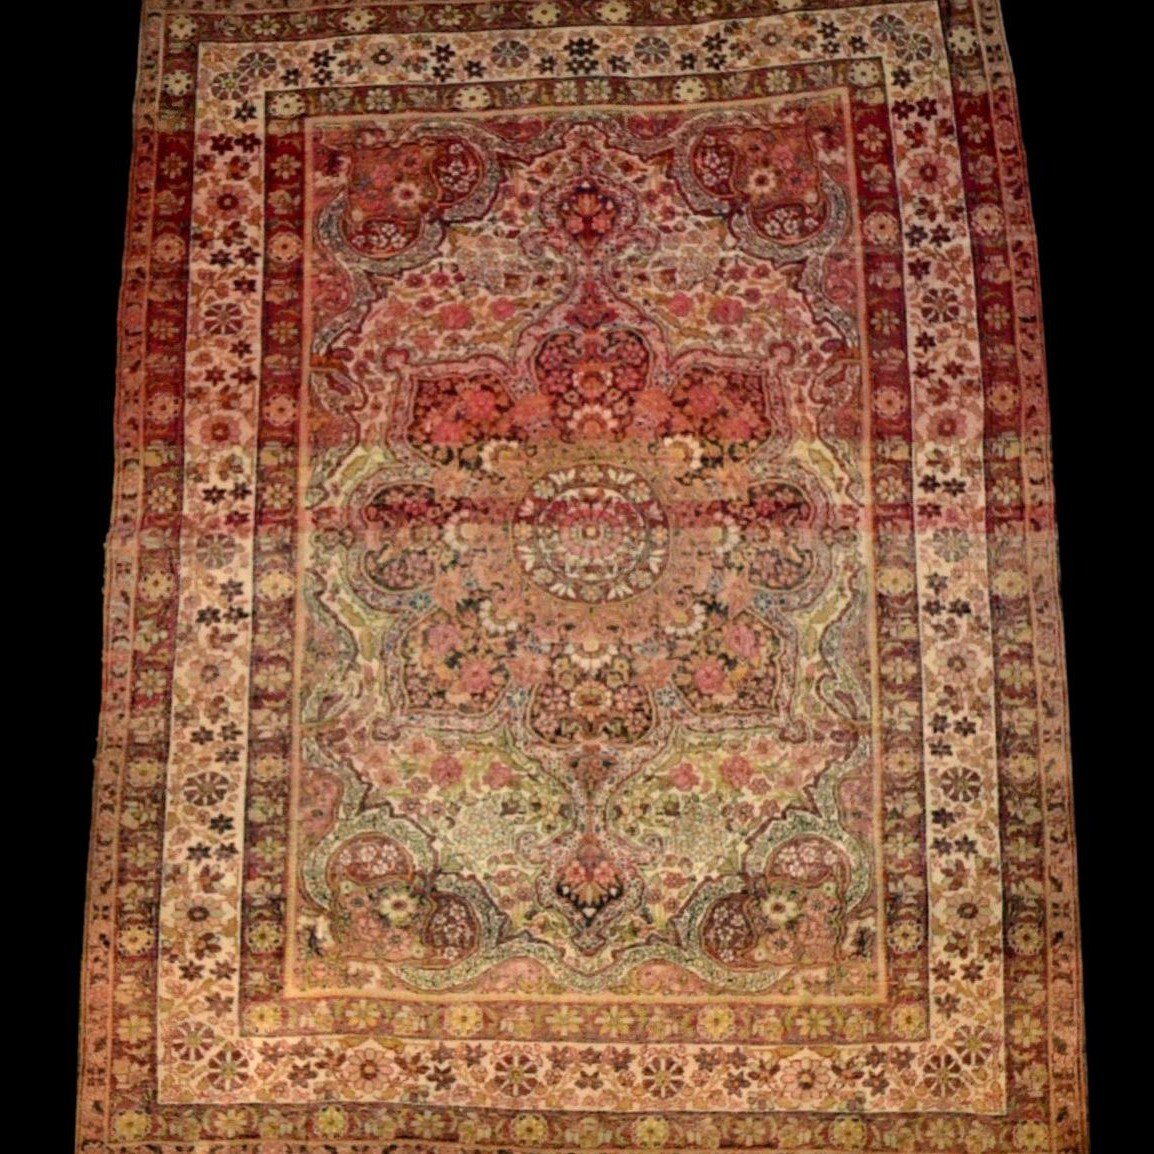 Antique Kirman Rug, 136 X 179 Cm, Hand-knotted Wool Around 1880 In Persia, Iran, Kadjar Dynasty